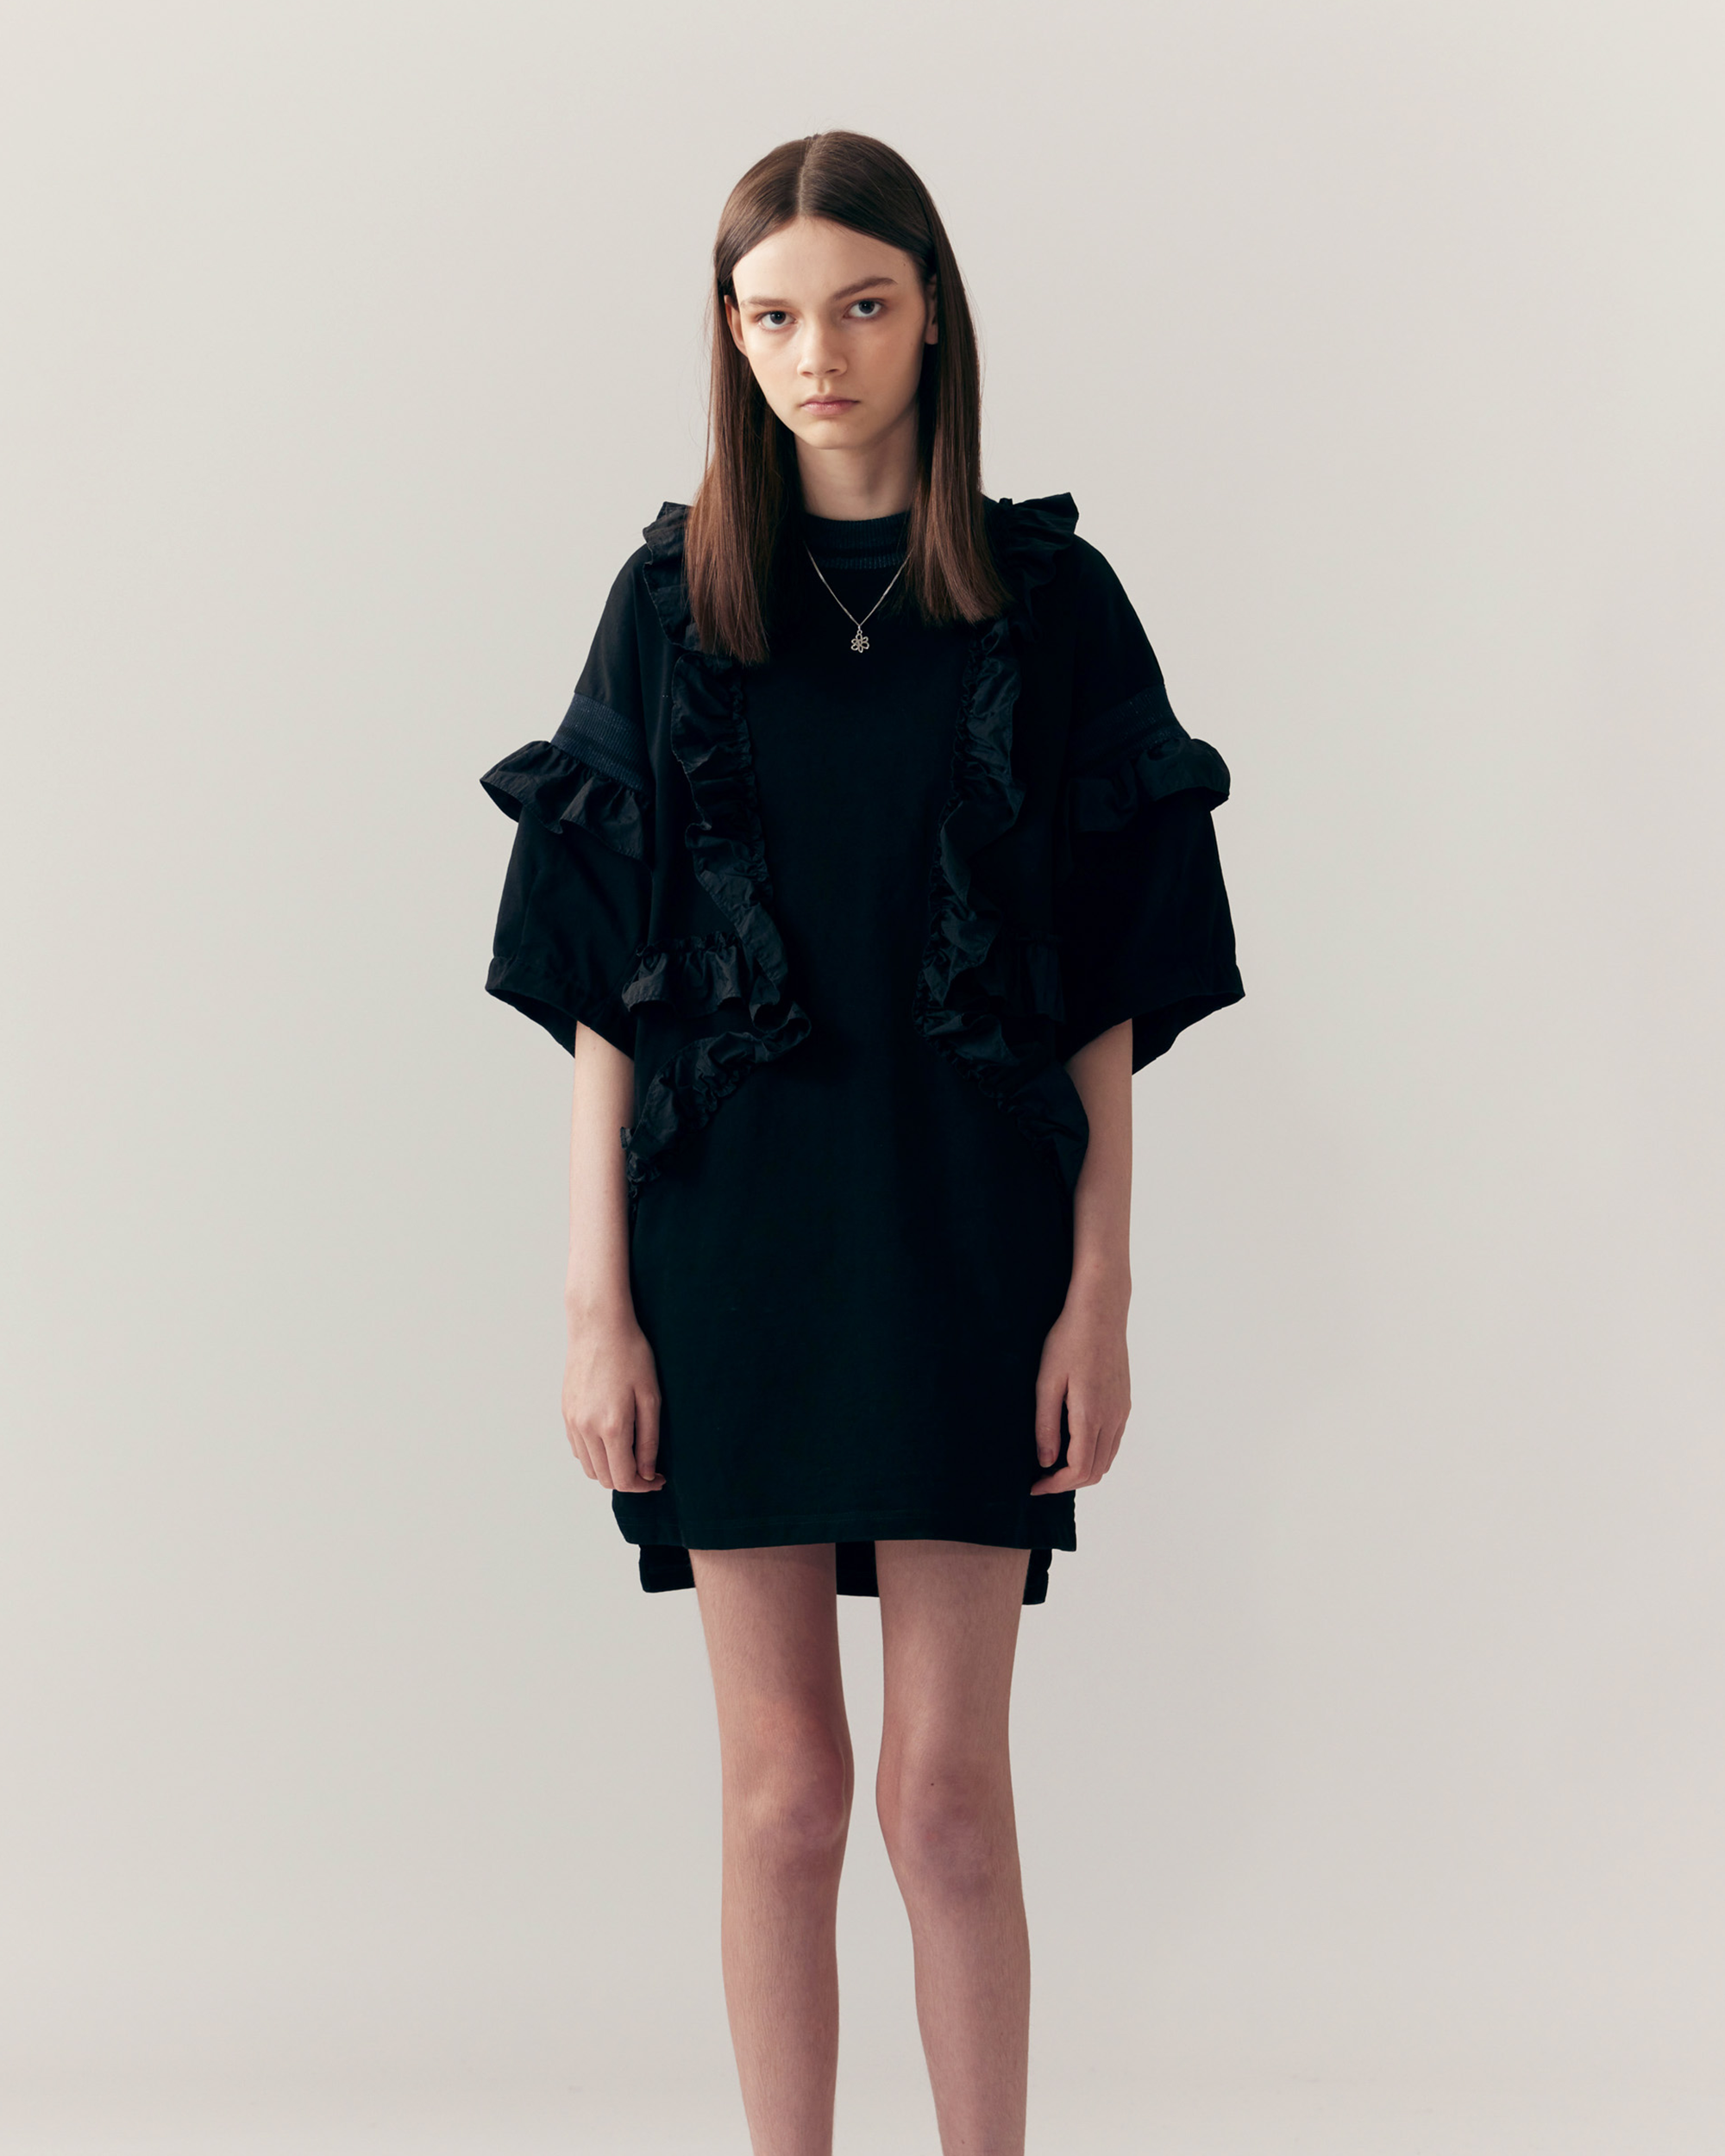 Elysia Ruffle Dress - Black